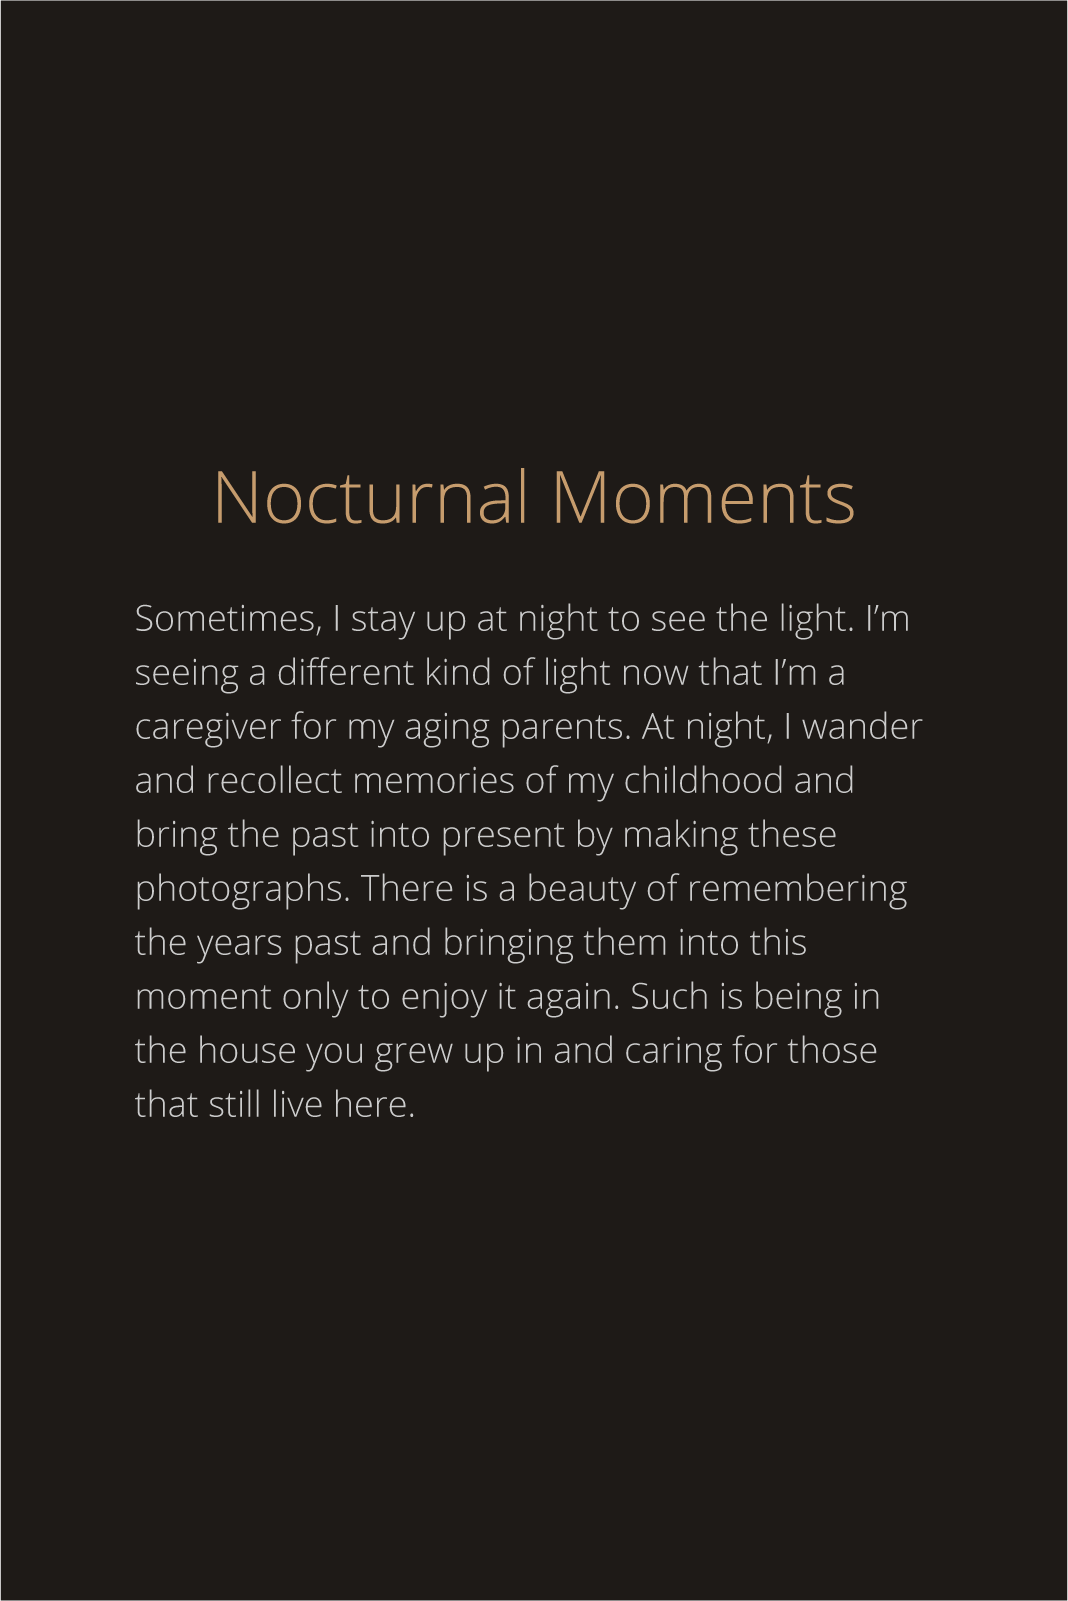 Artist Statement Nocturnal Moments Vertical